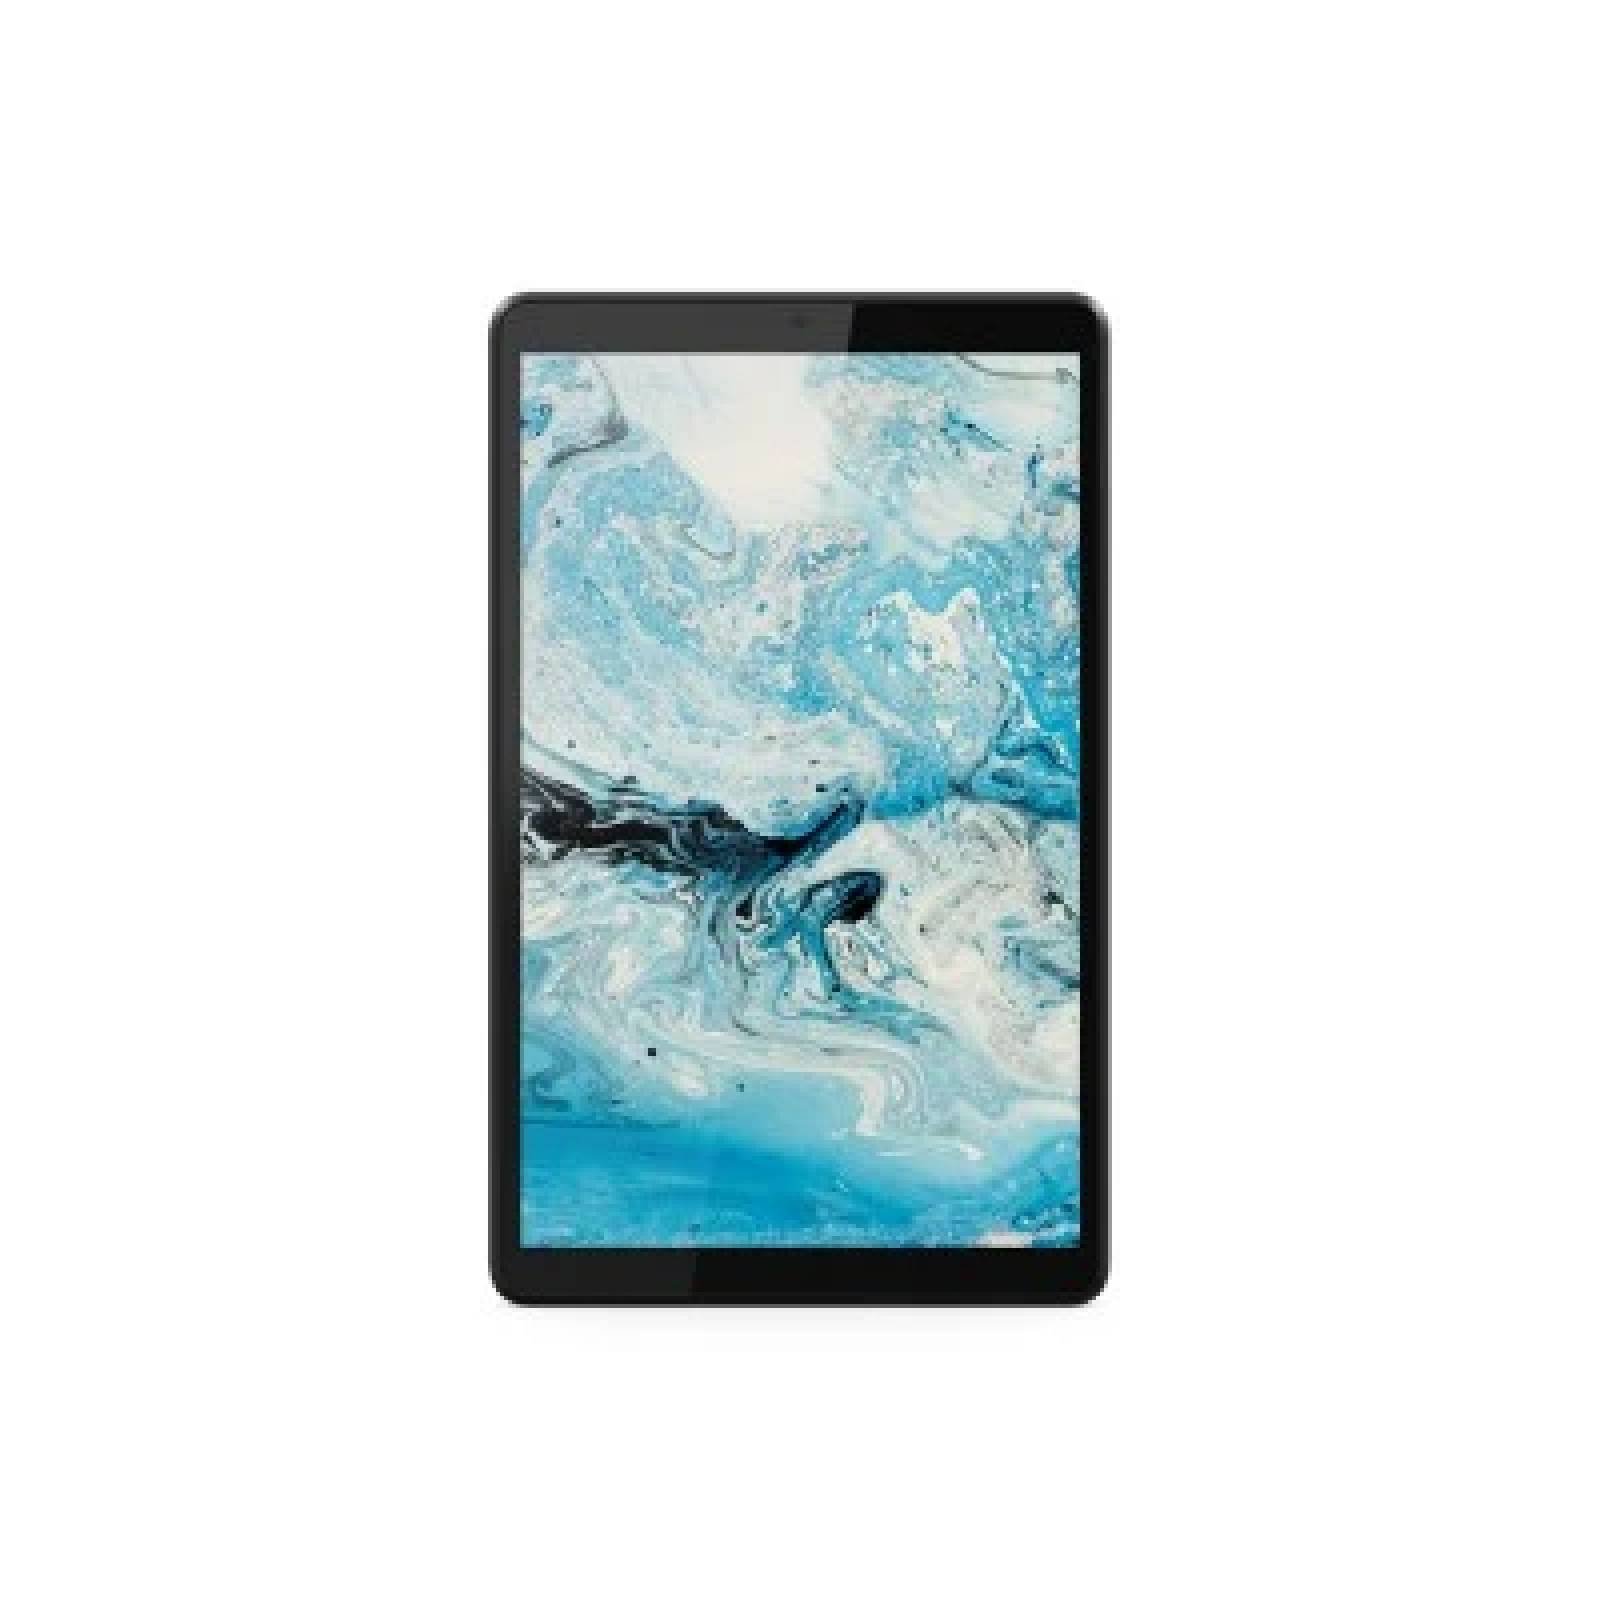 Tableta LENOVO M8 HD TB-8505F - 2 GB, MediaTek Helio A22, 8 pulgadas, Android Pie, 32 GB